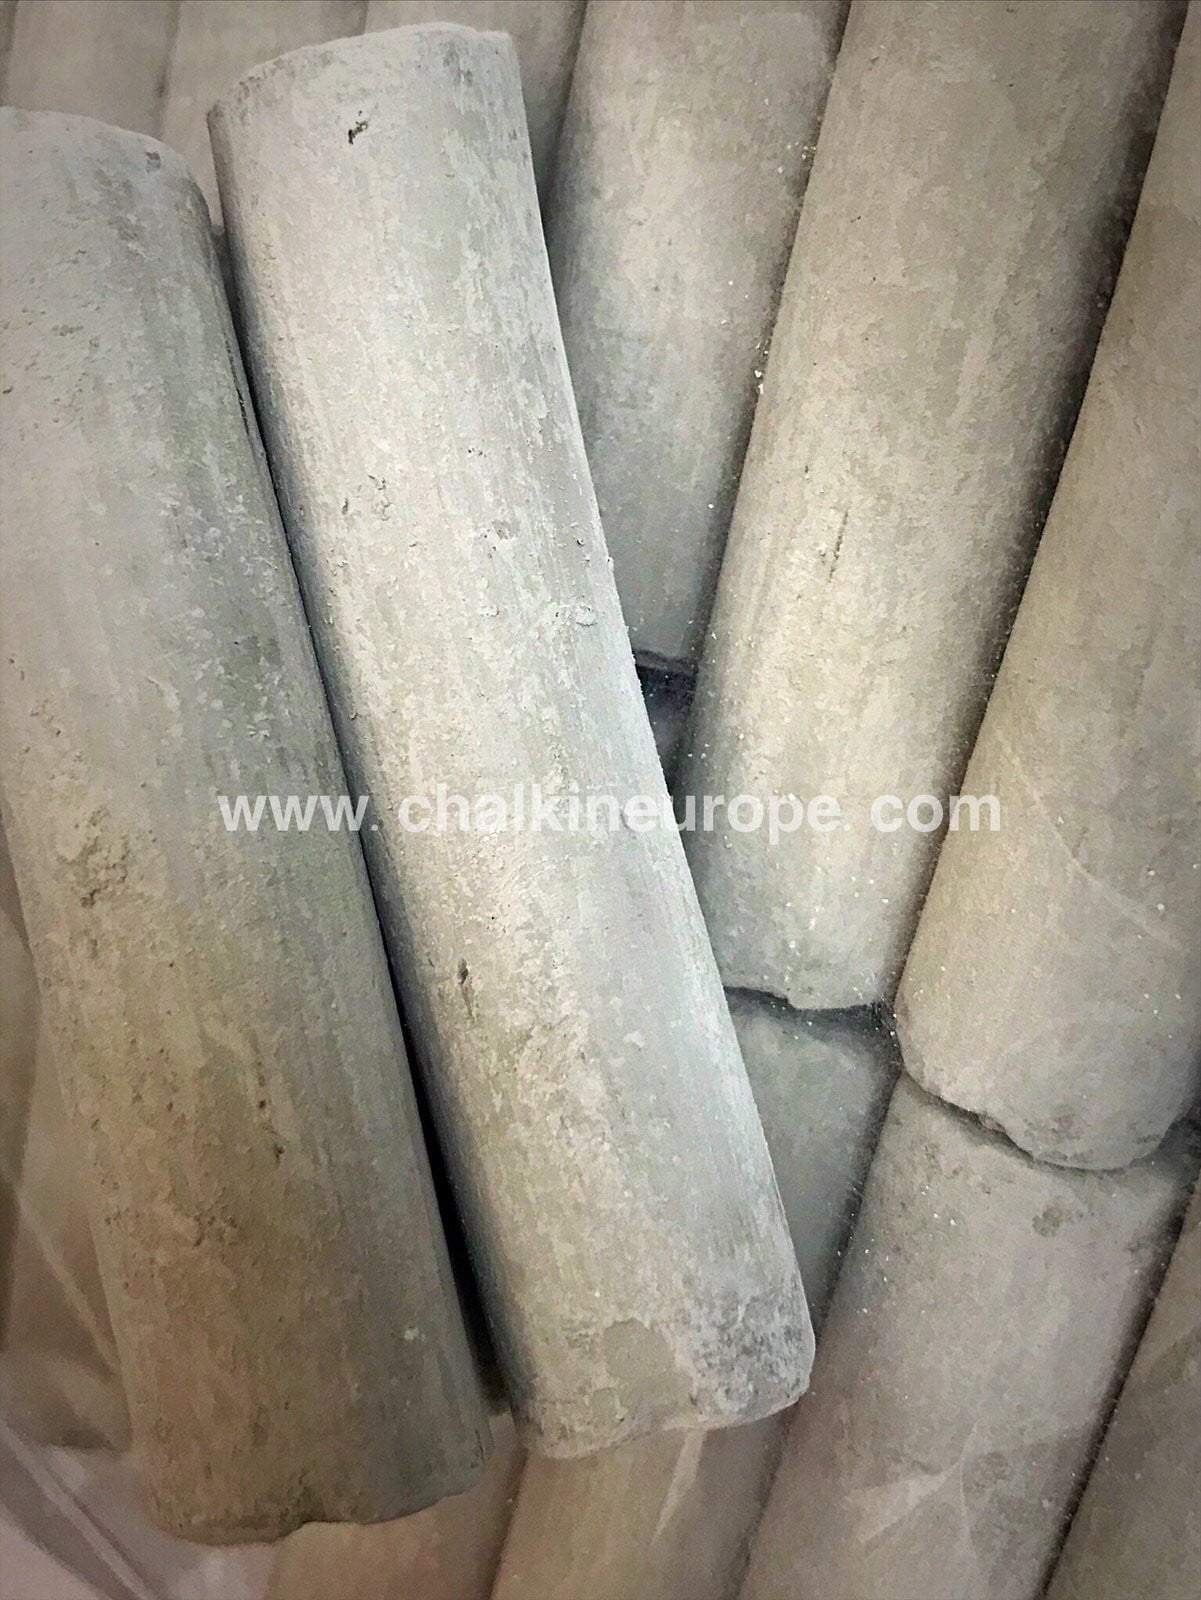 Enchantress Clay Sticks - Chalkineurope